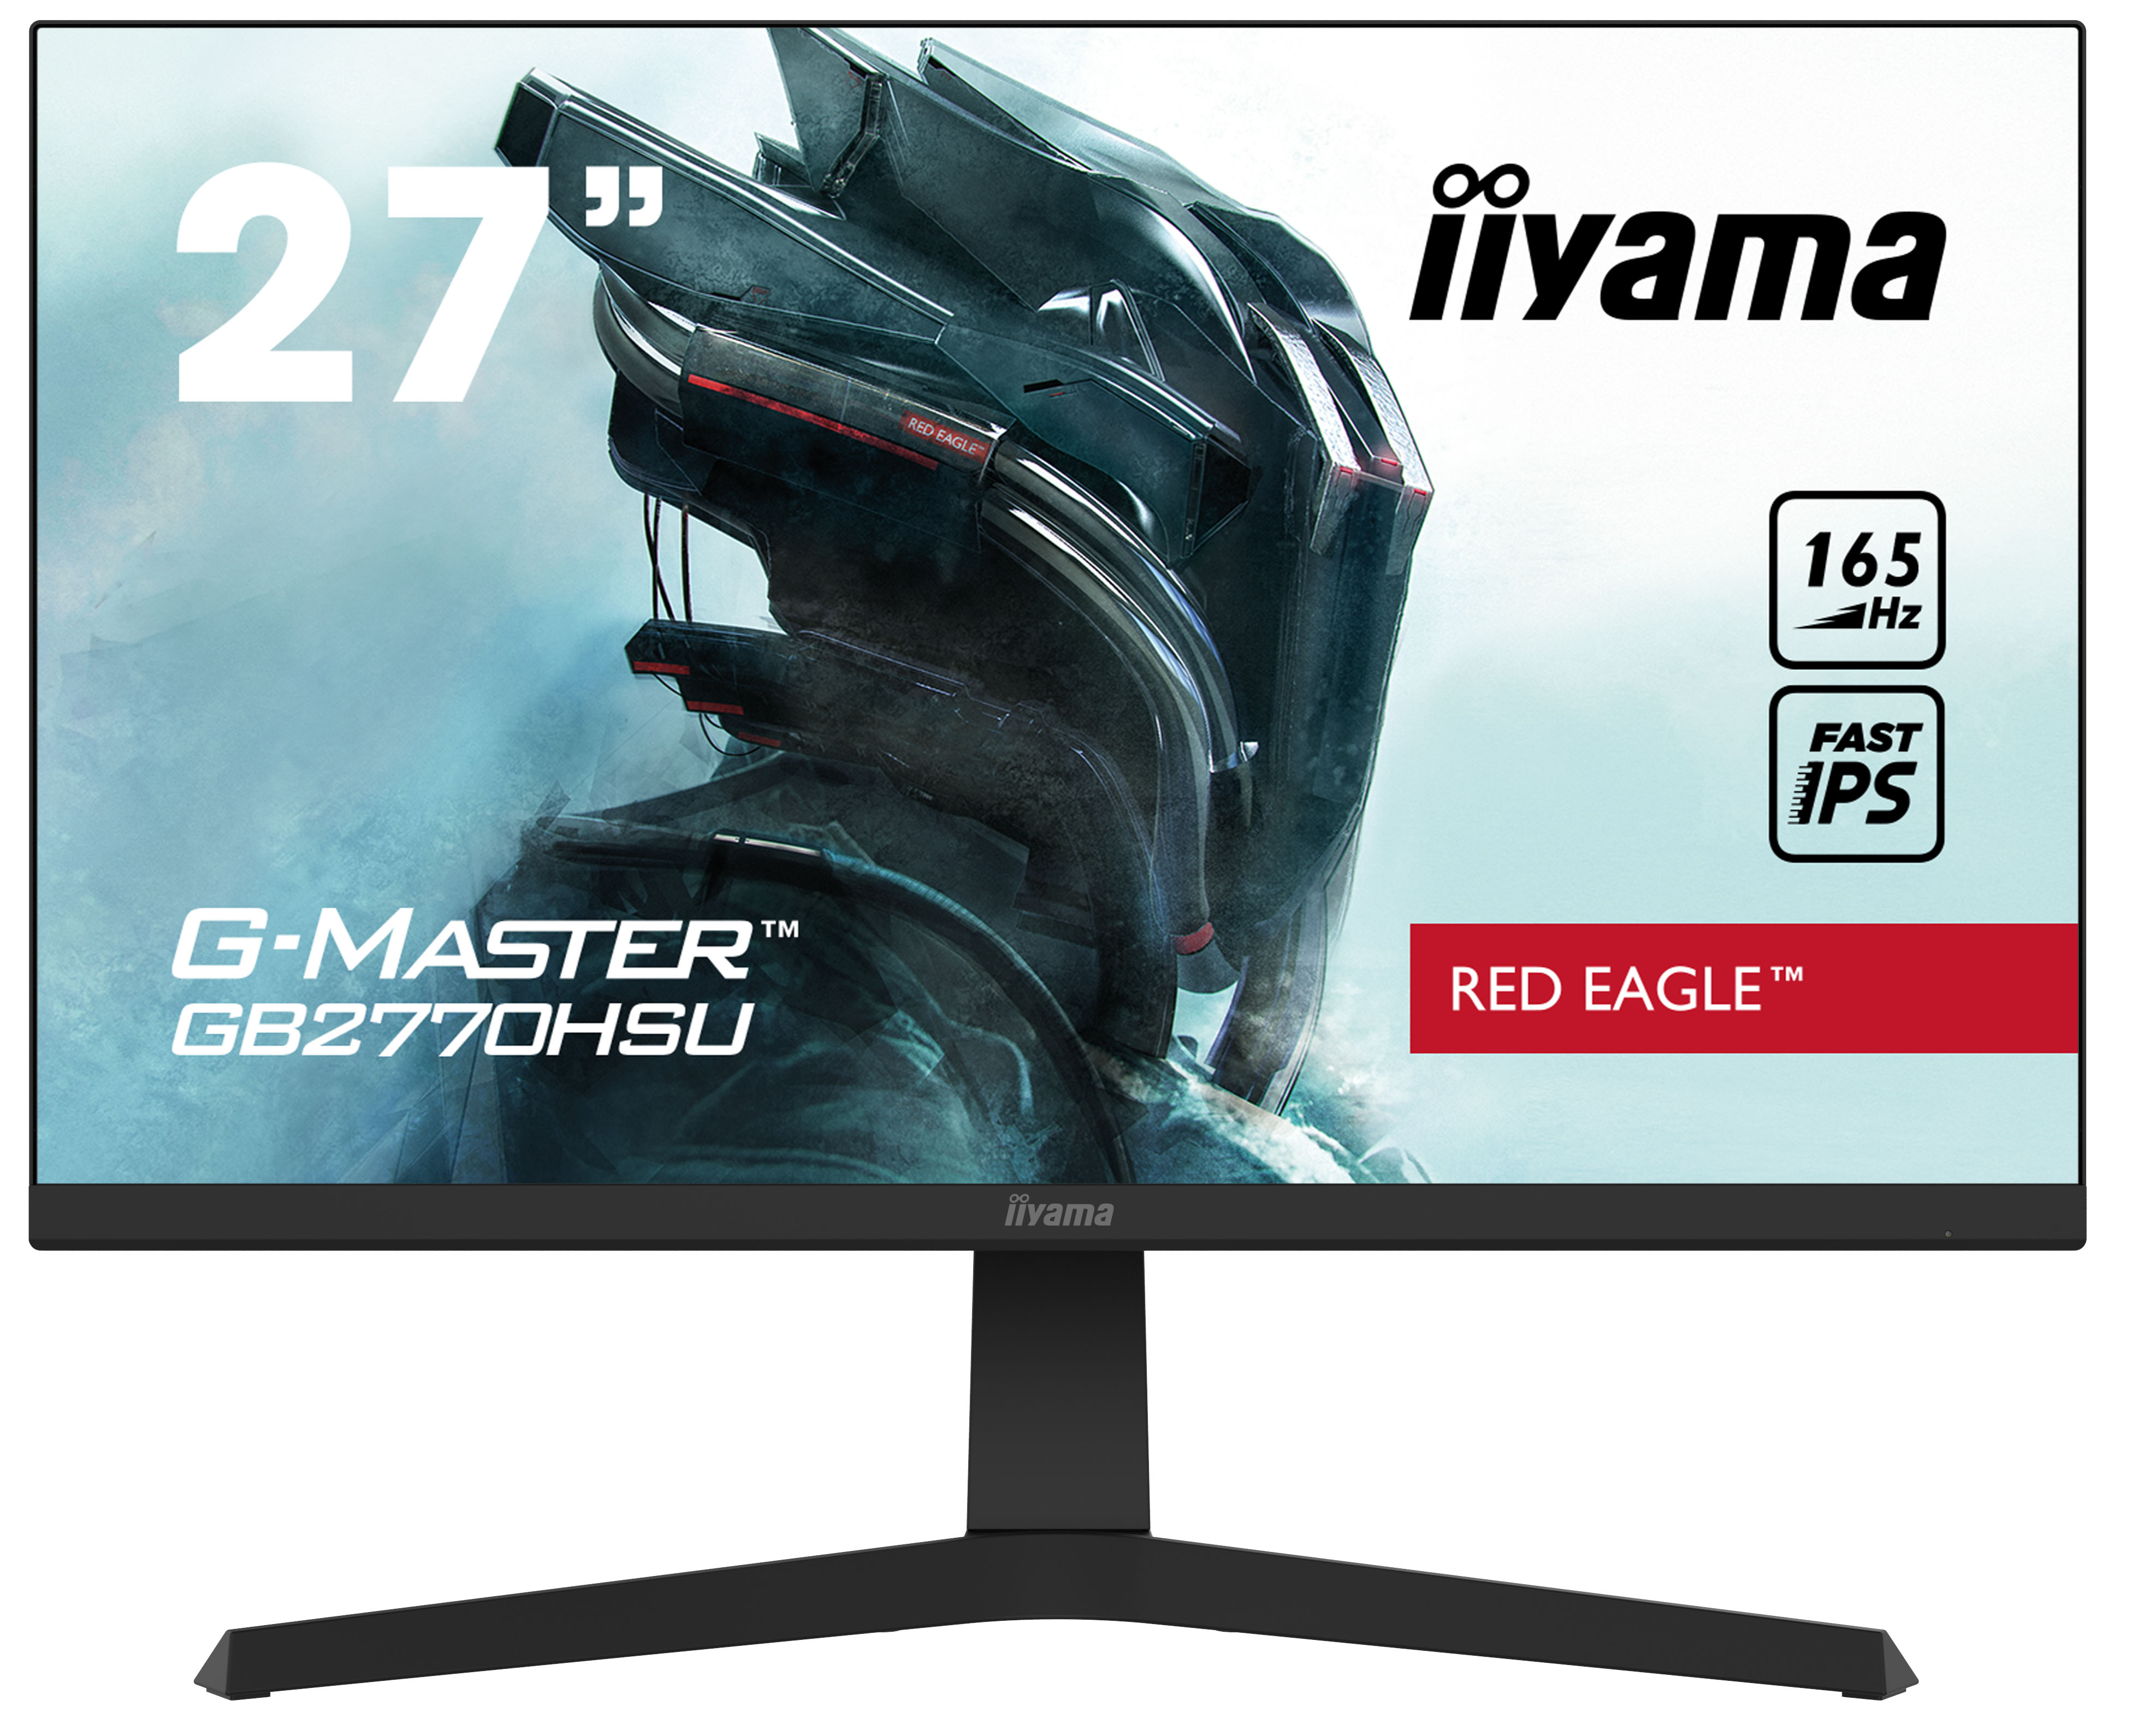 Iiyama G-MASTER GB2770HSU-B1 RED EAGLE | 27" | Gaming Monitor